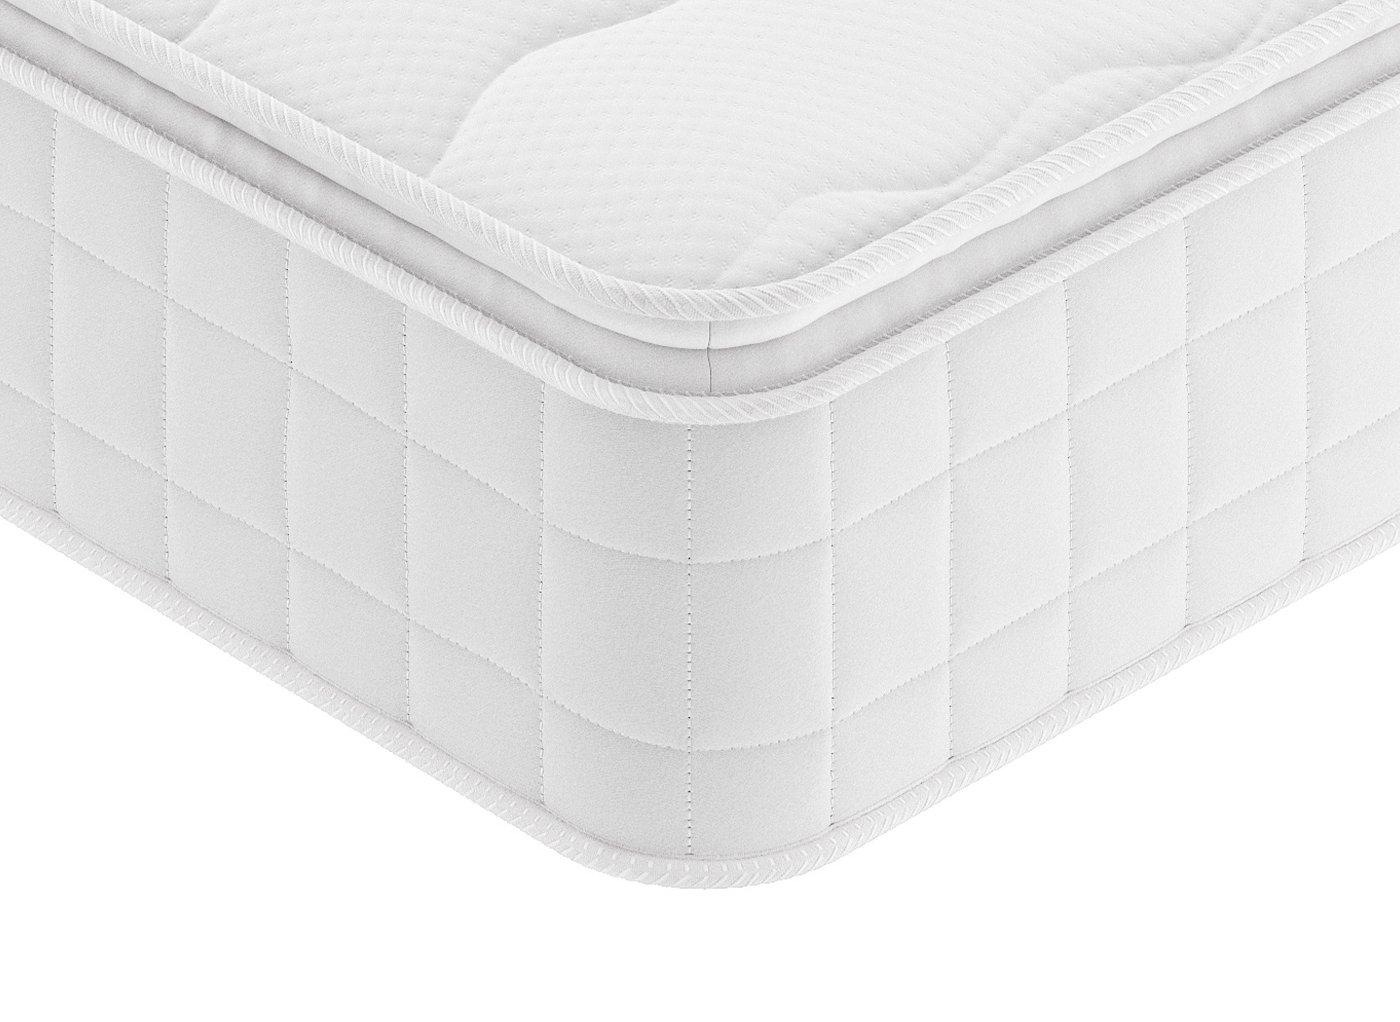 therapur actigel 1000 mattress reviews